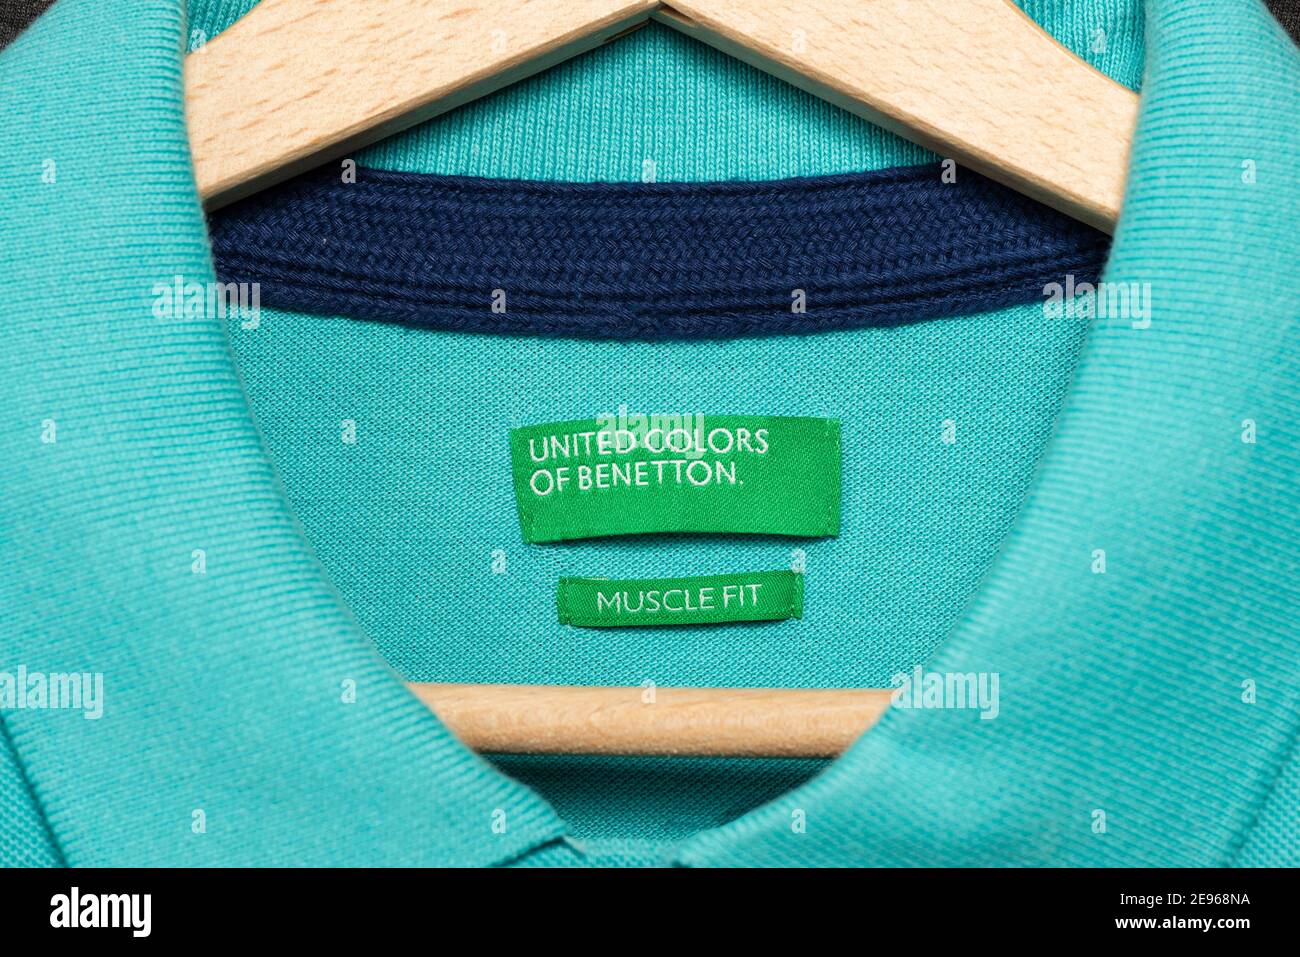 Door overdrijven Geurloos United Colors of Benetton Muscle Fit green label on teal tee shirt hanging  on wooden hanger Stock Photo - Alamy